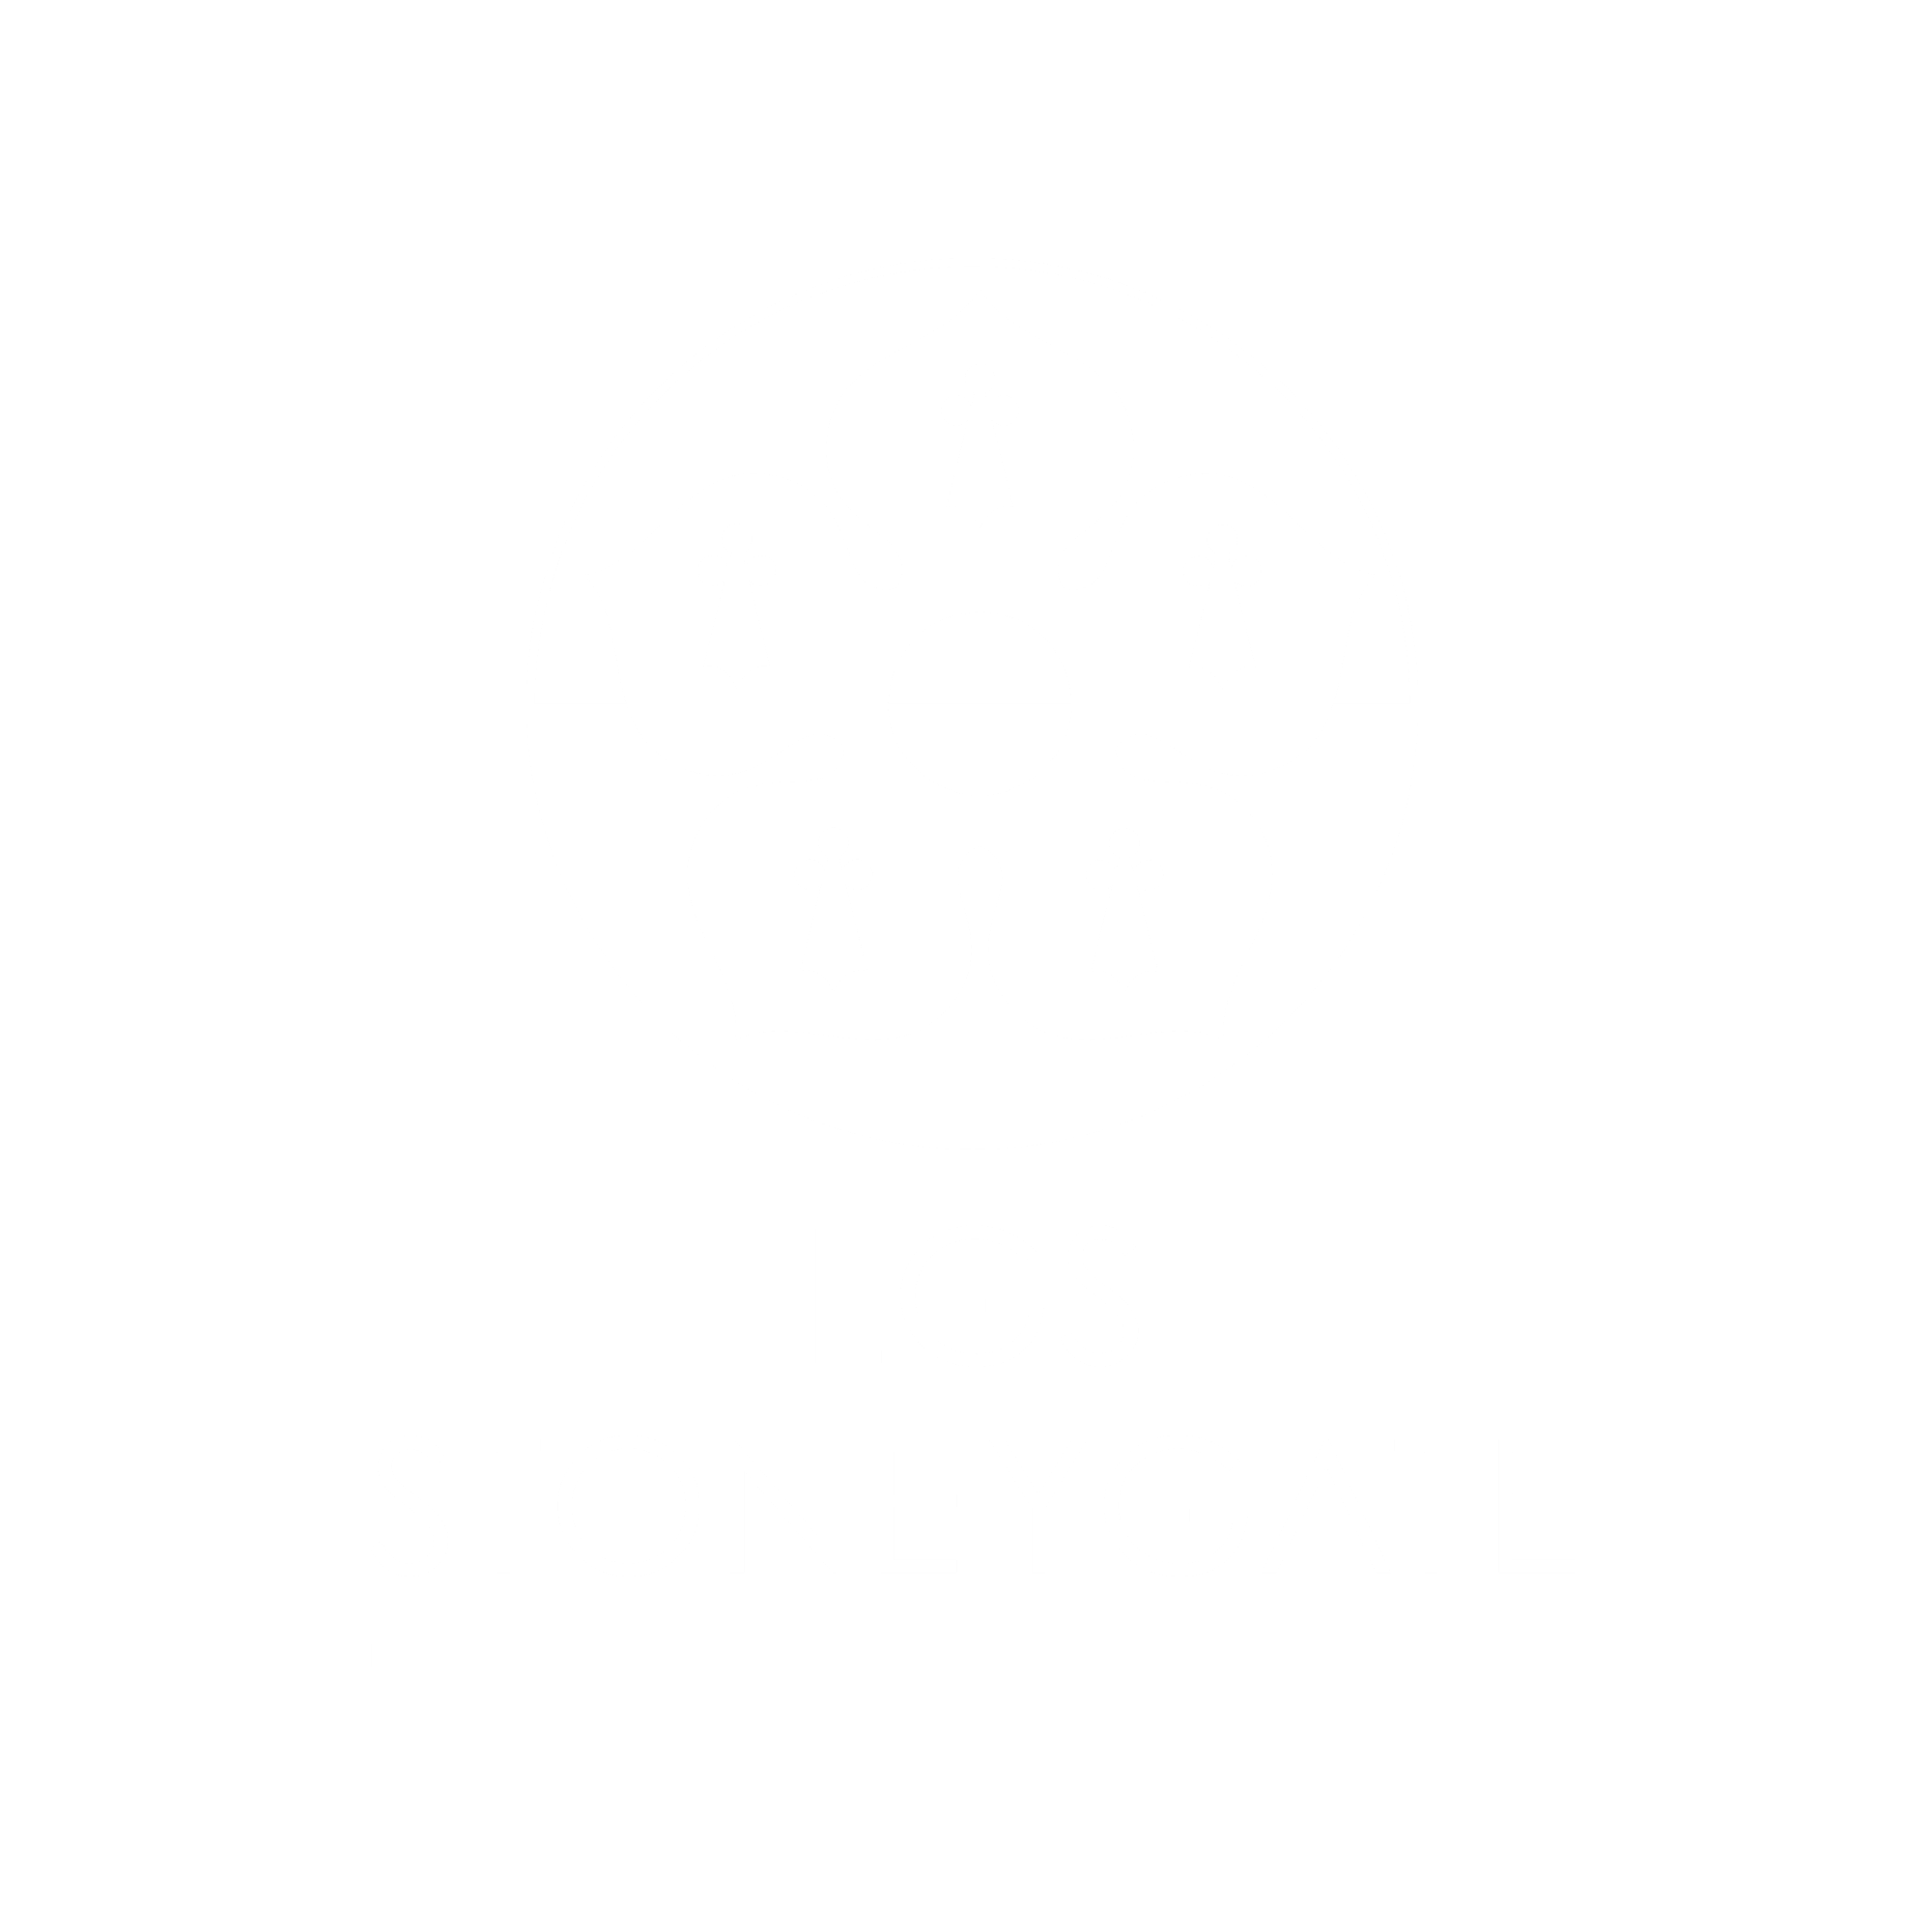 LGS Stoneygate